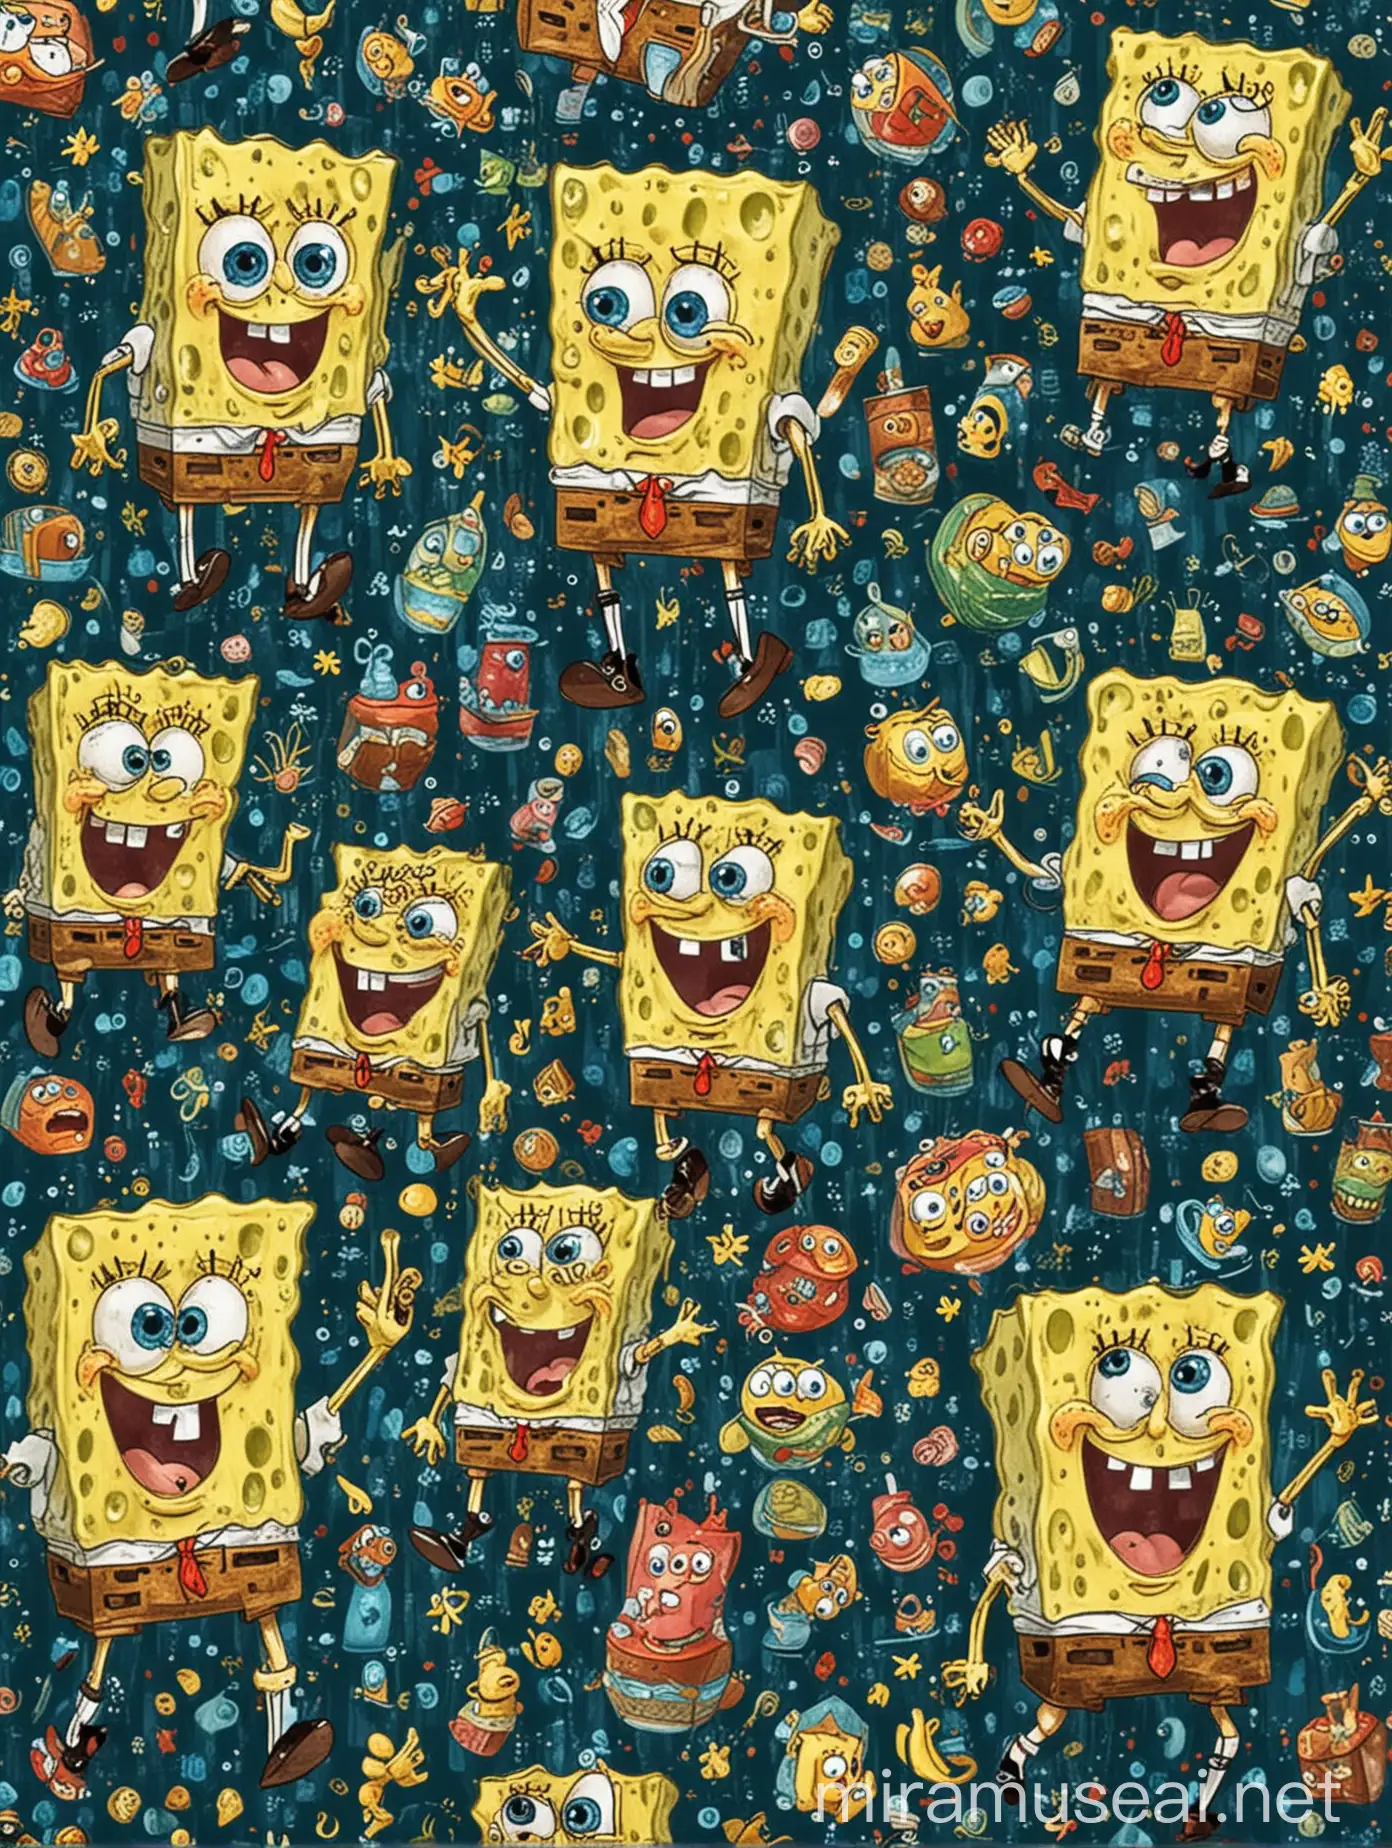 Childrens Theme Background with Spongebob Design